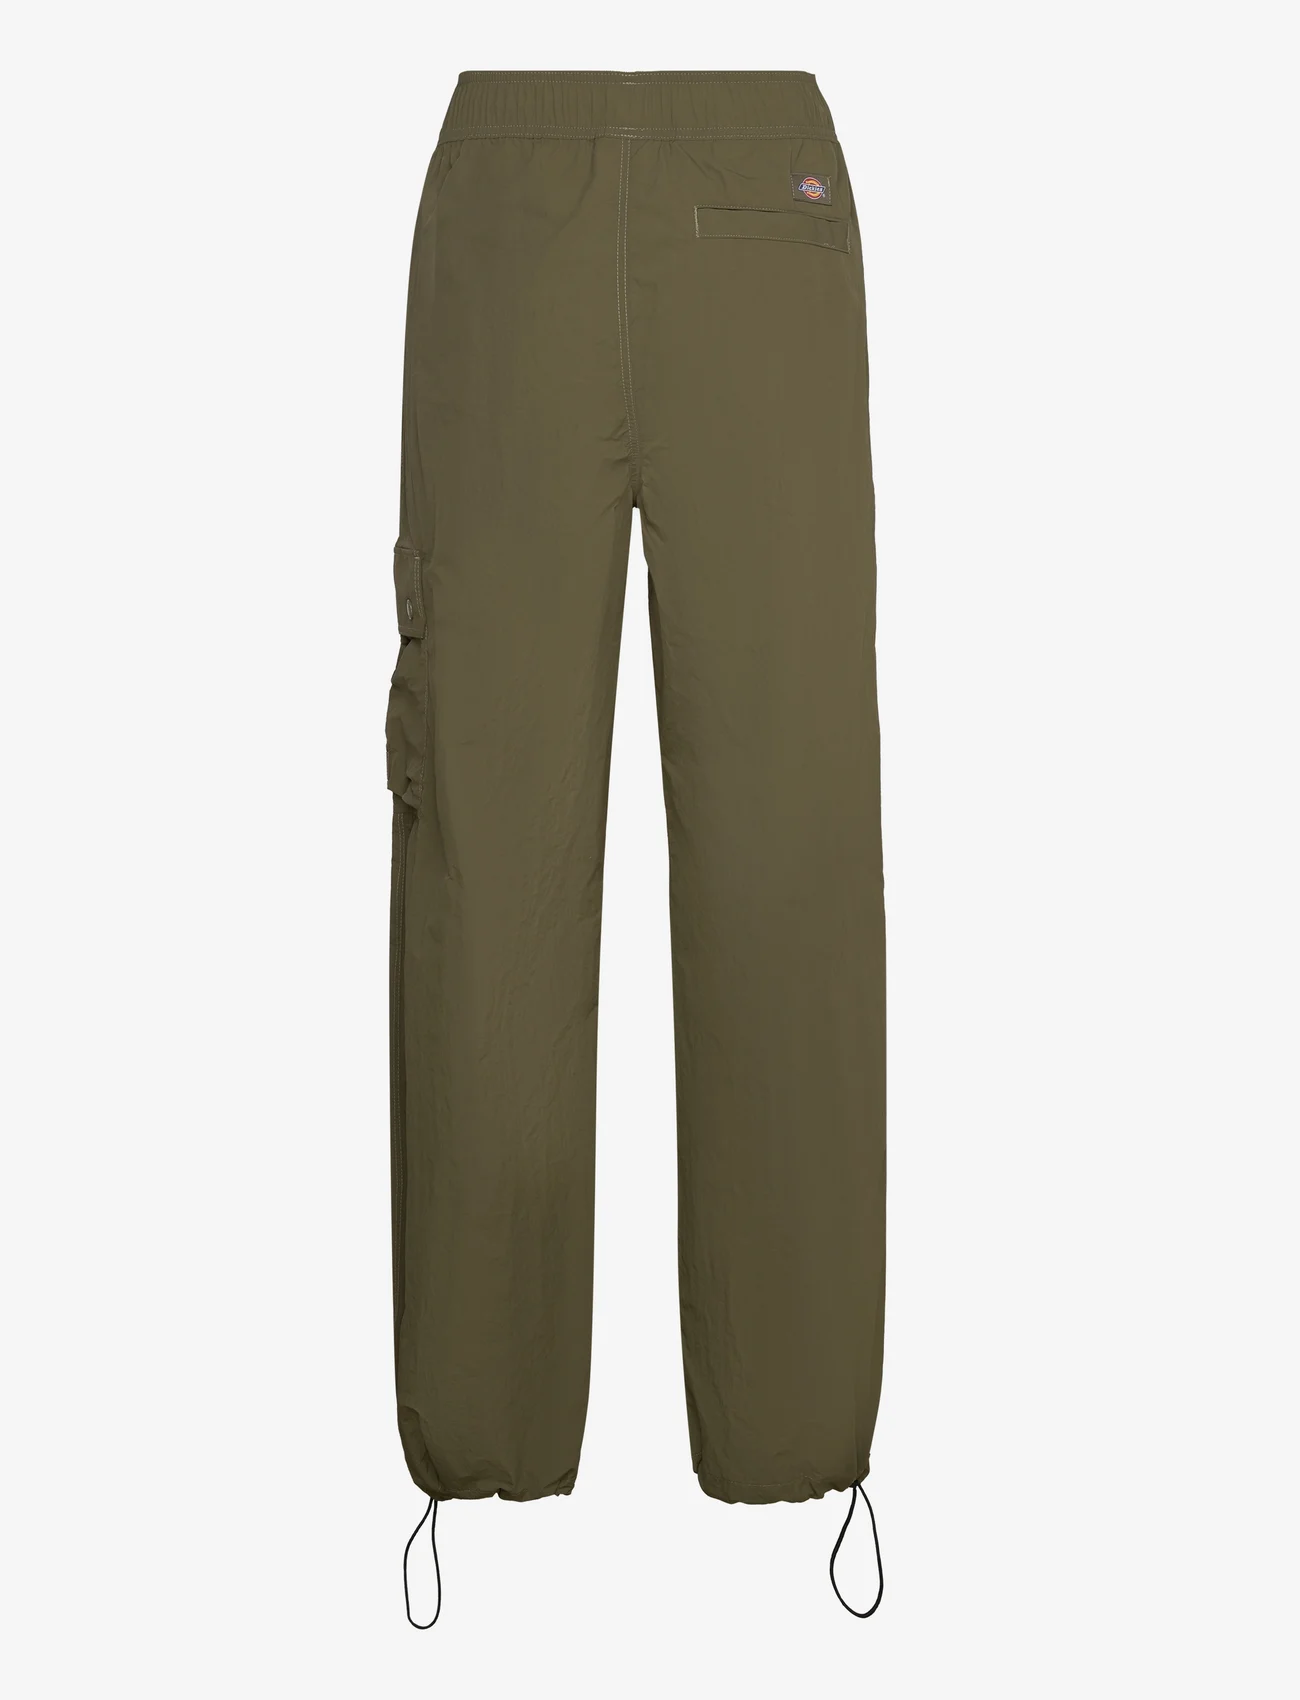 Dickies - JACKSON CARGO W - cargo pants - military gr - 1